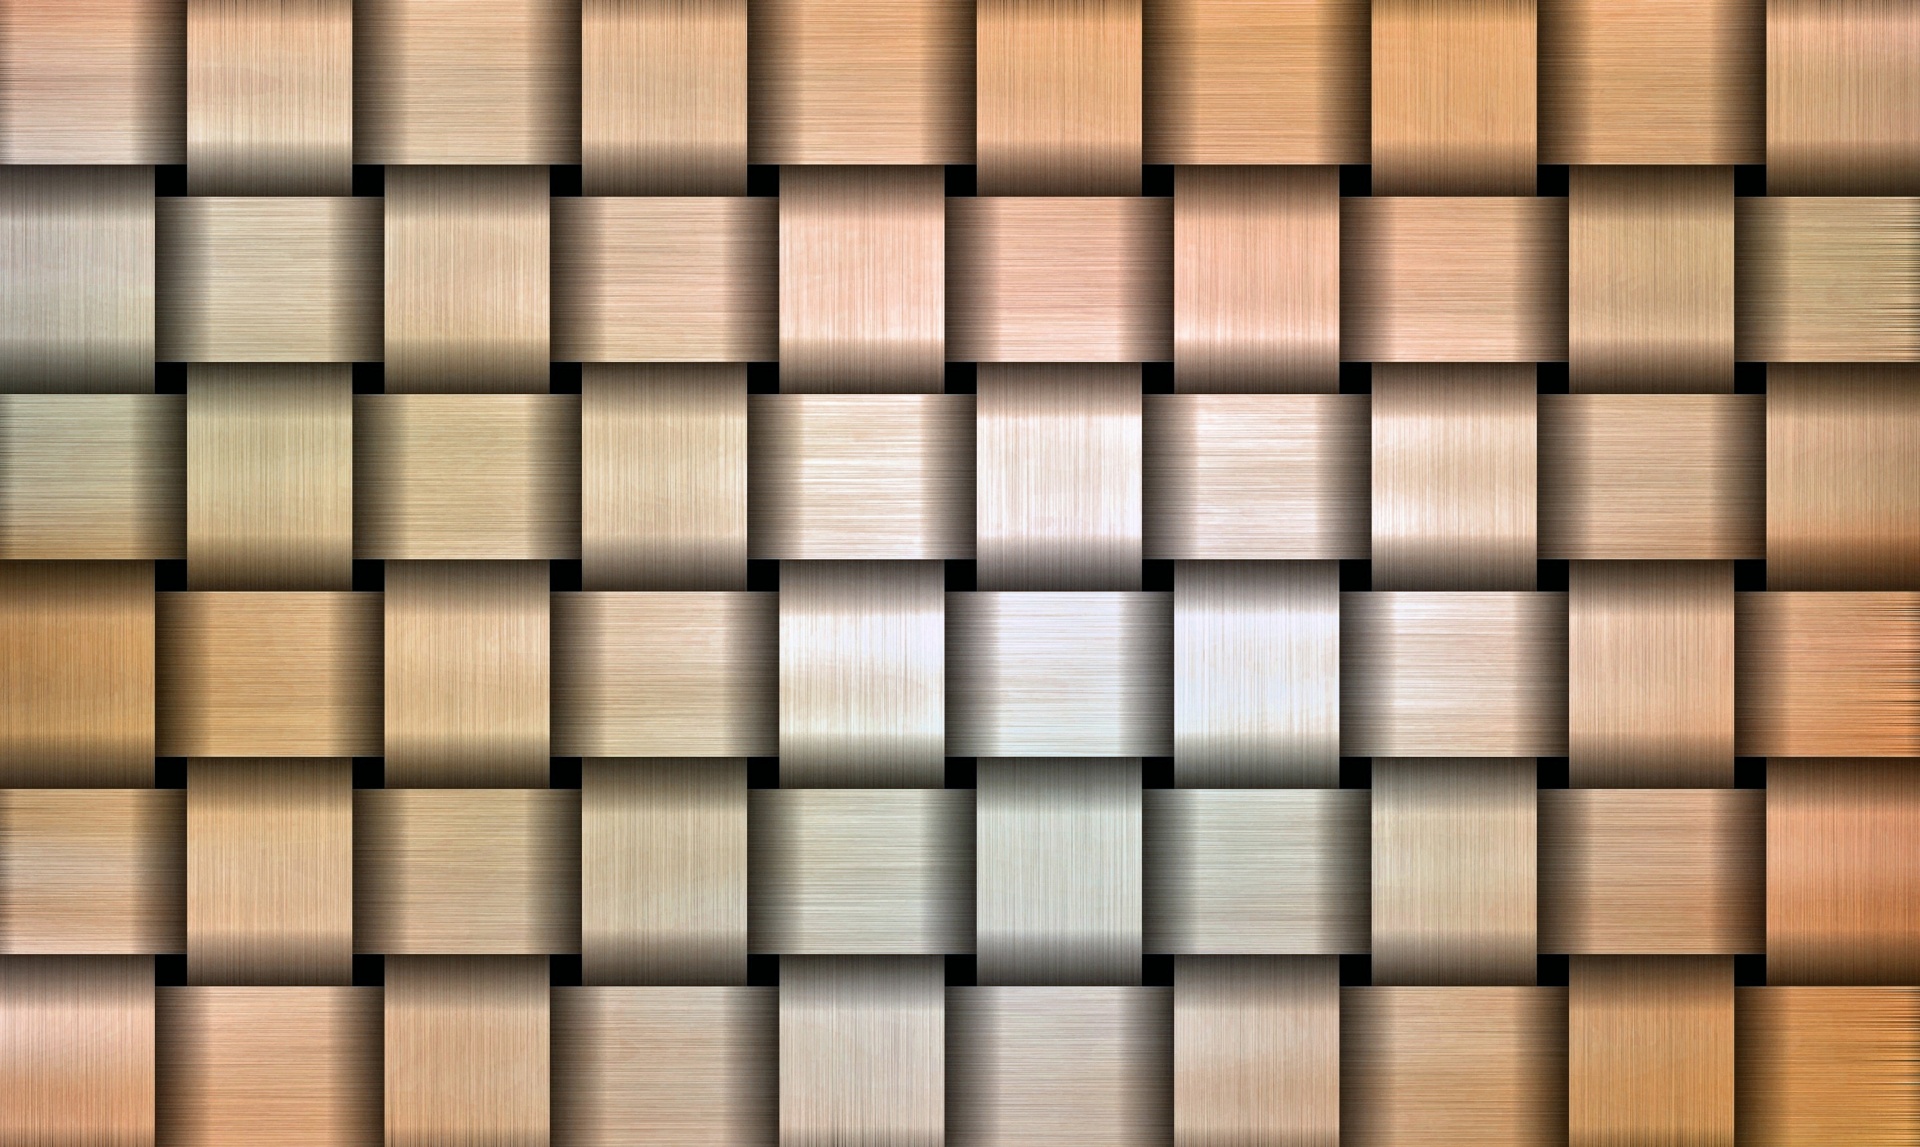 Metal Grid Pattern Background